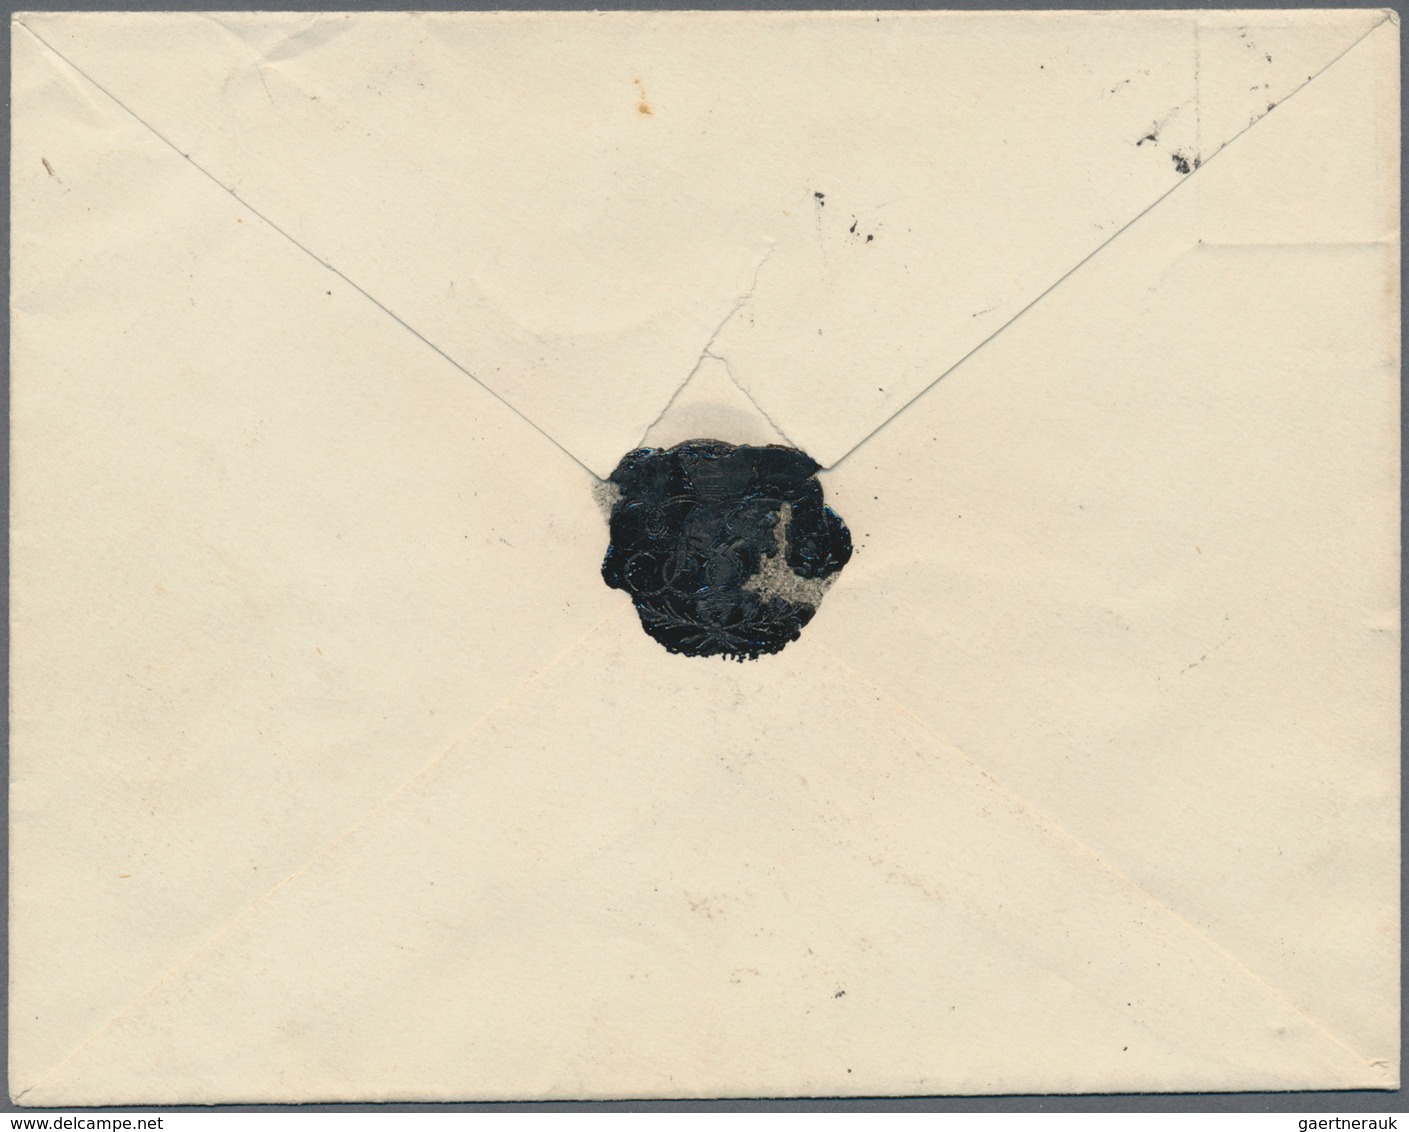 Finnland - Ganzsachen: 1860, 10 Kop. Carmine Postal Stationery Cover With Pen-stroke Cancel And Besi - Postwaardestukken